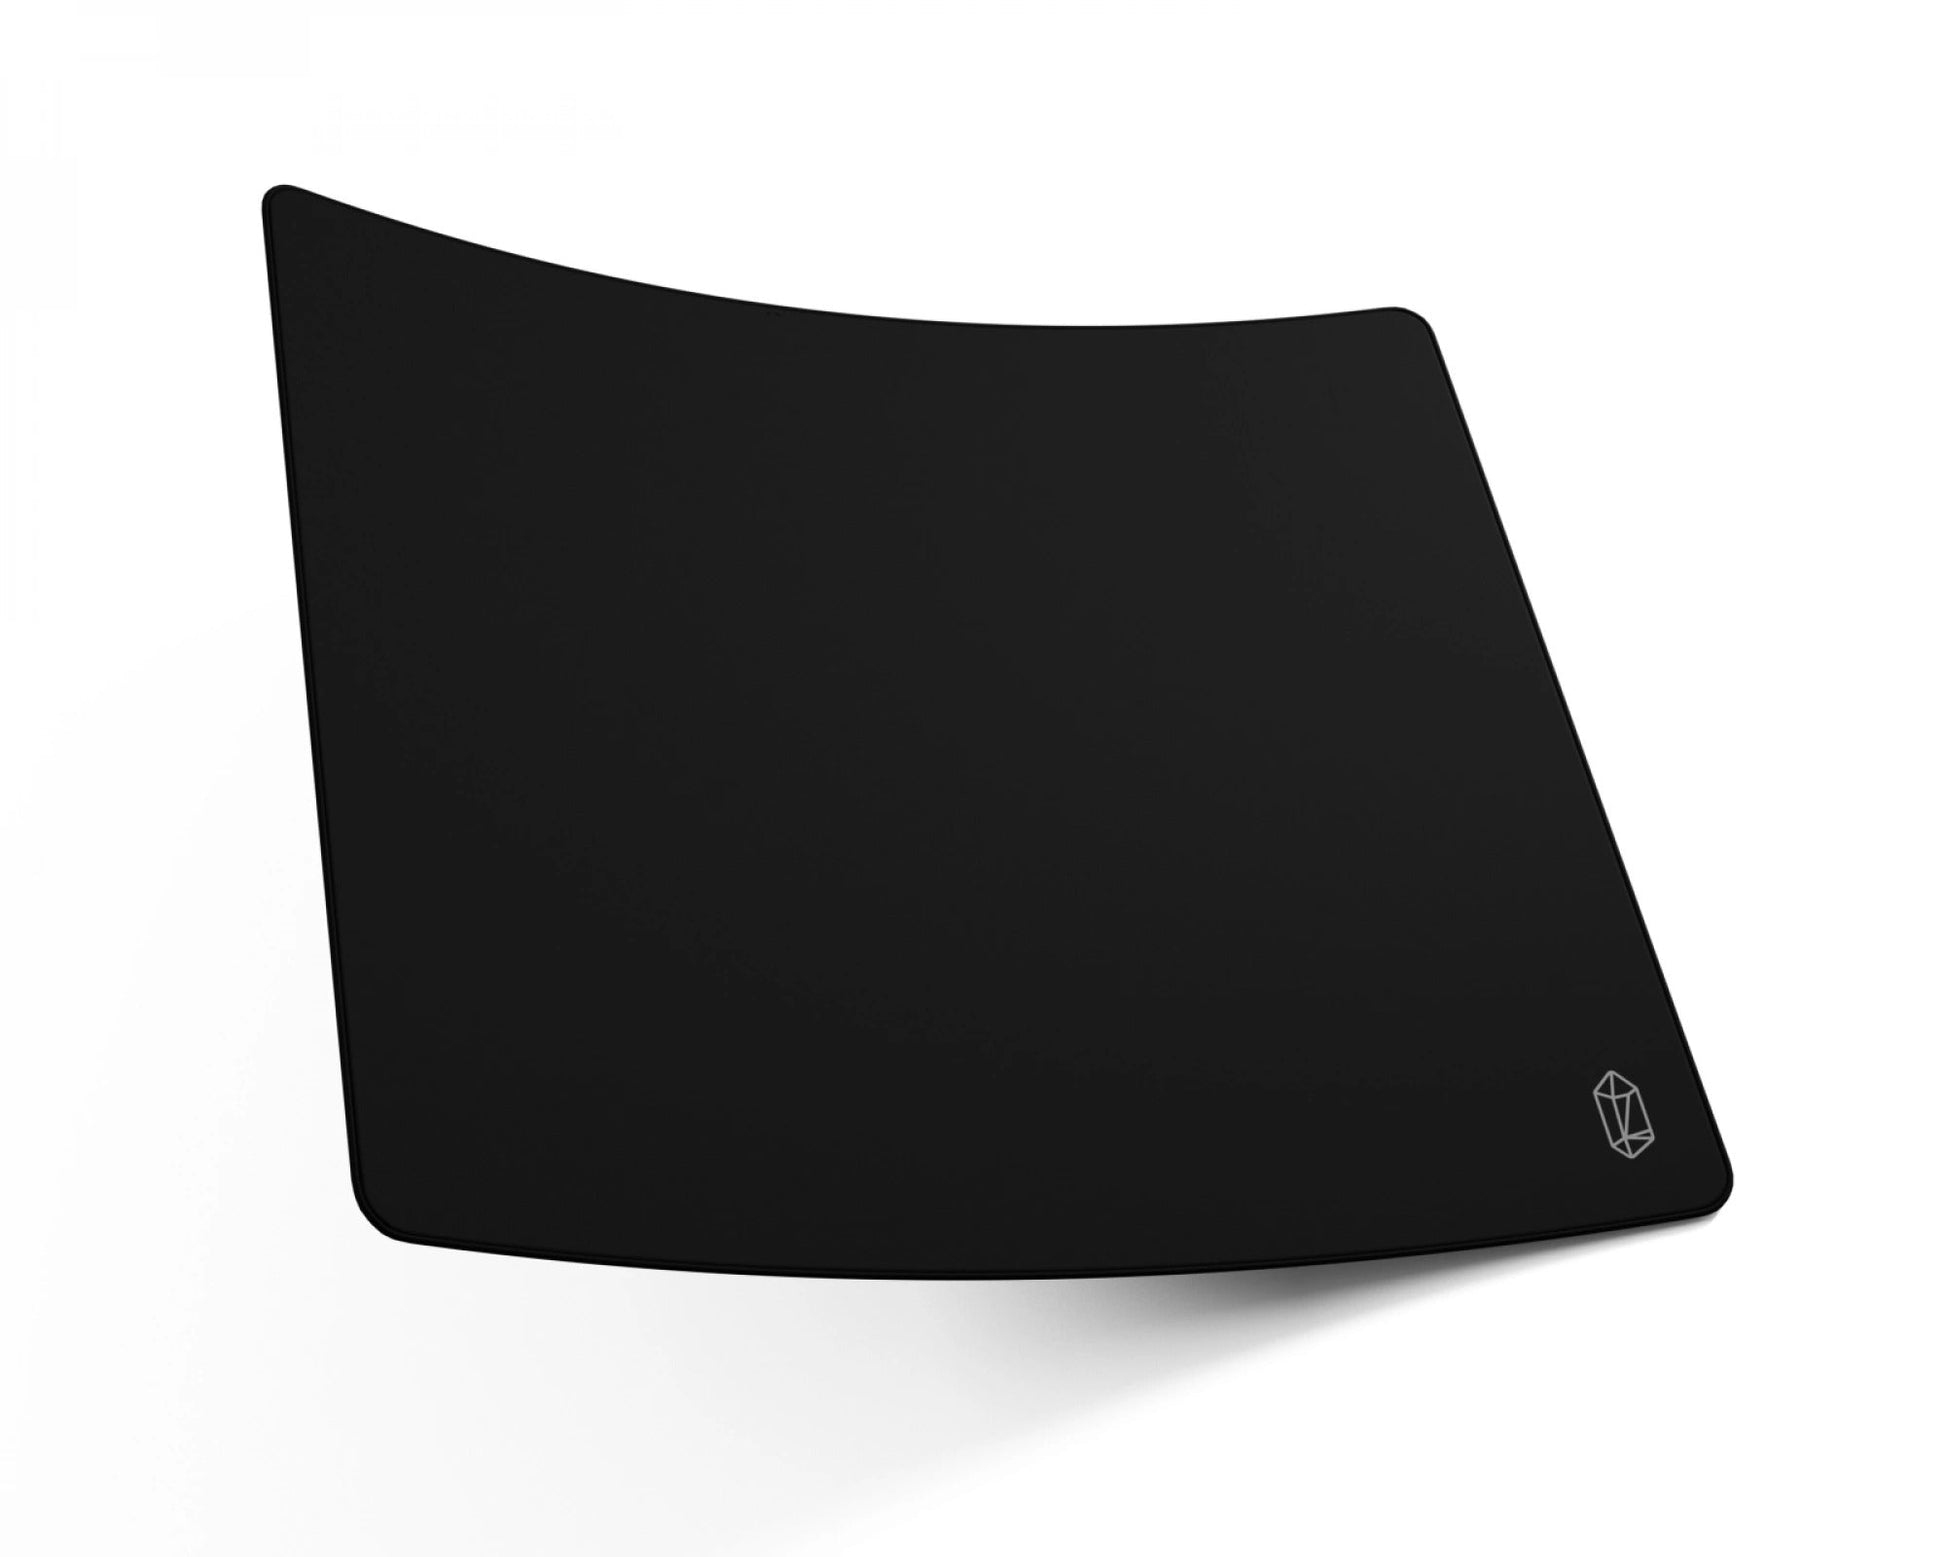 Lamzu Energon Hybrid Gaming Mousepad Nylon + Lycra(Spandex) Surface SCR Compact Base